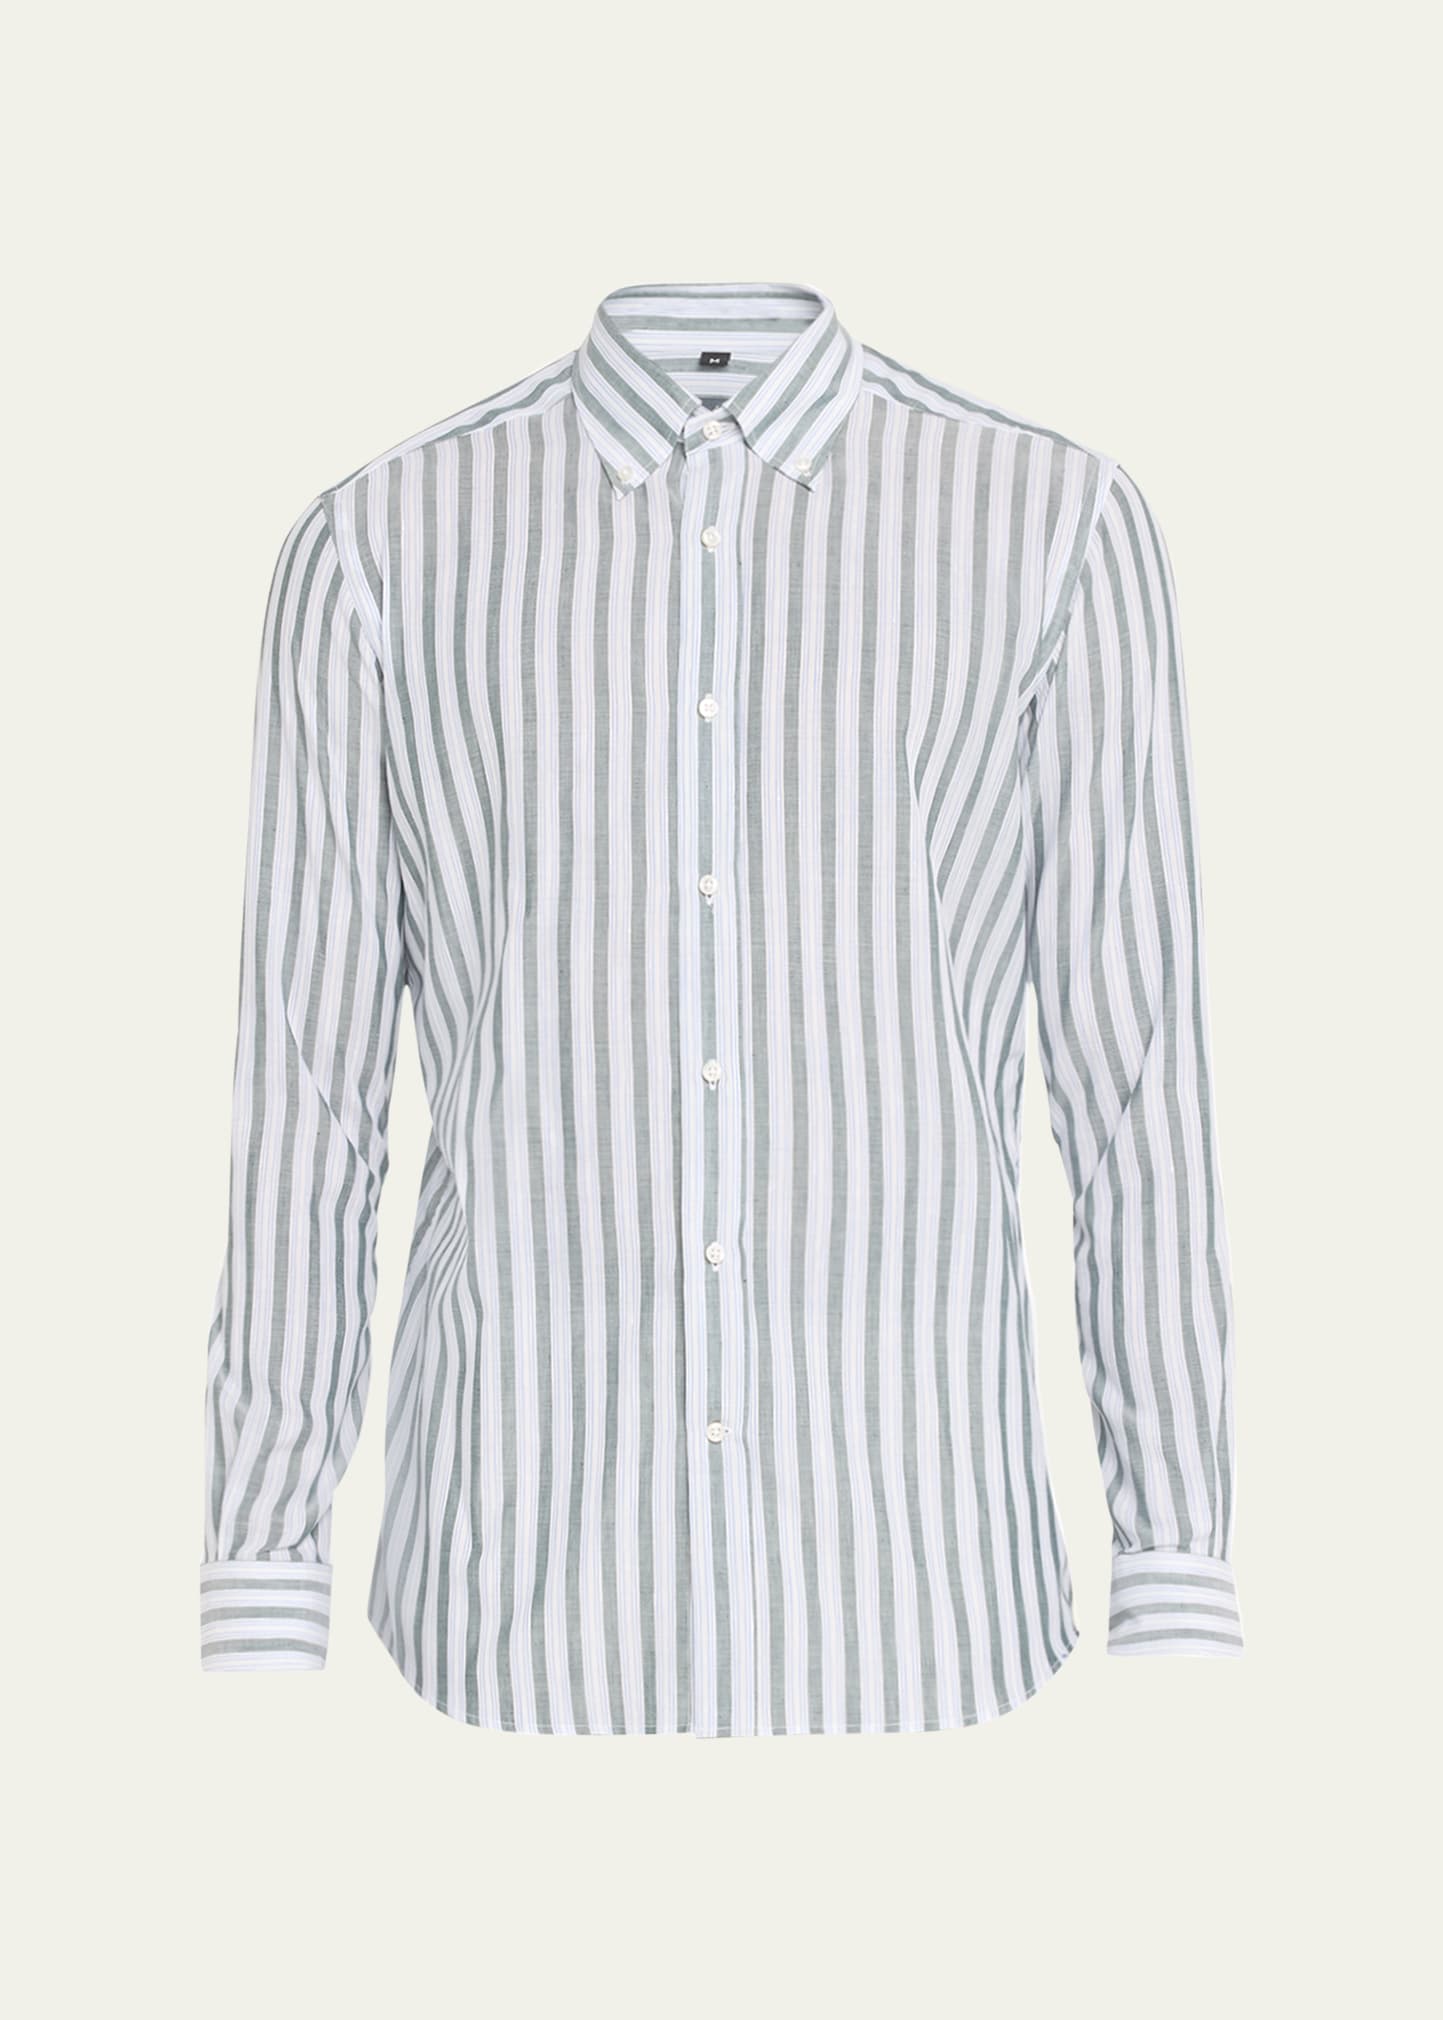 Men's Linen-Cotton Stripe Casual Button-Down Shirt